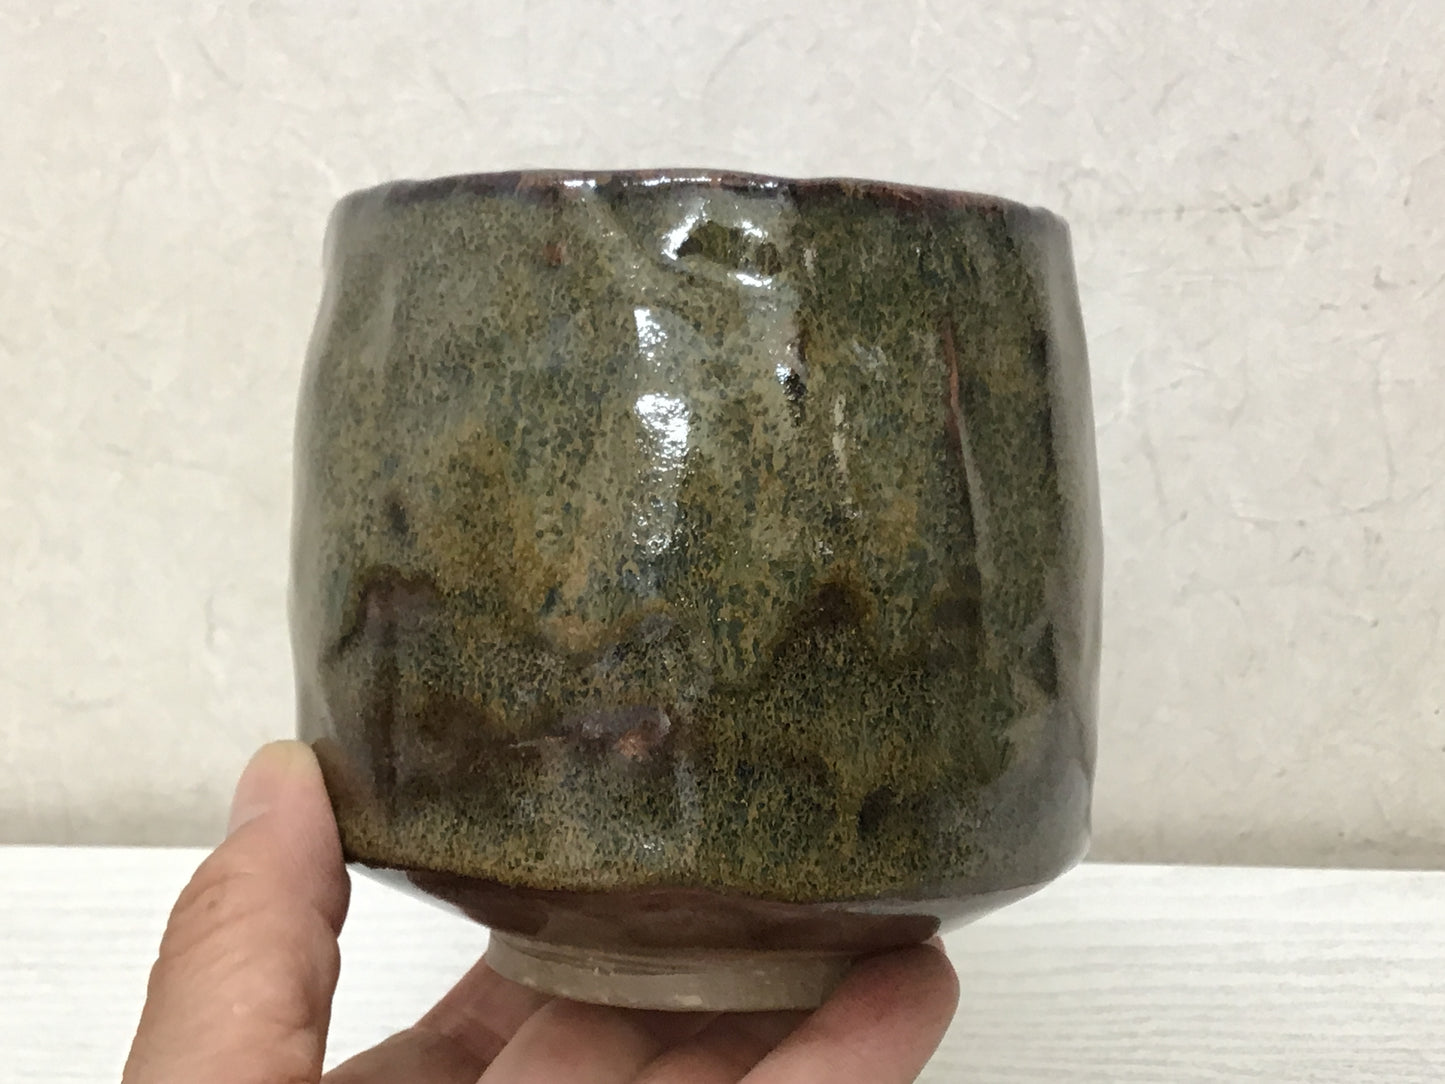 Y1756 CHAWAN Seto-ware Shunbu signed box Japanese bowl pottery tea ceremony